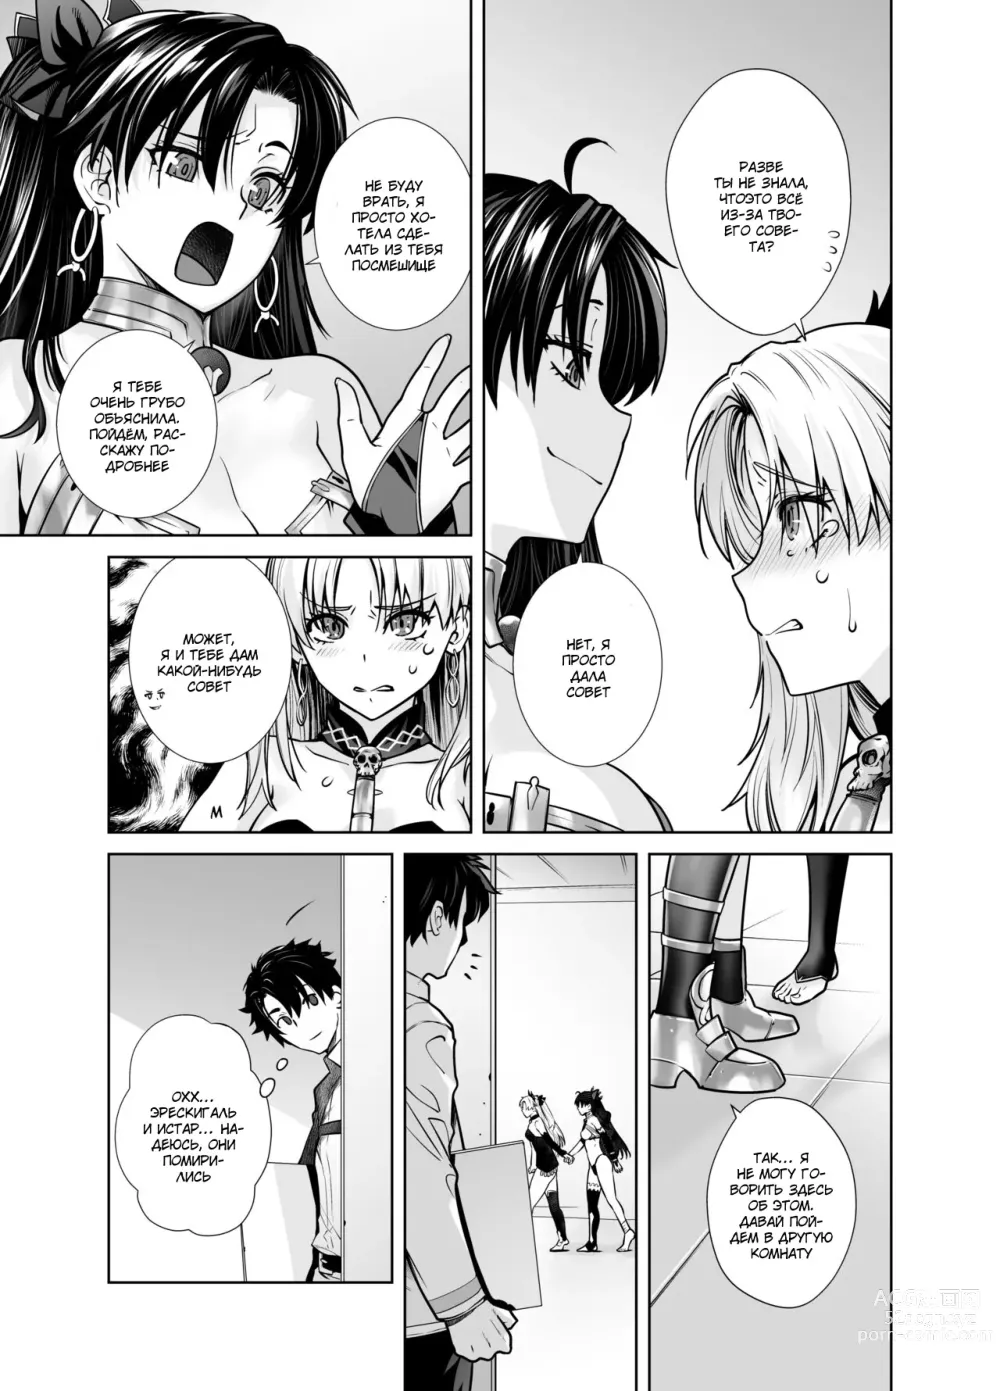 Page 7 of doujinshi HEAVENS DRIVE 10